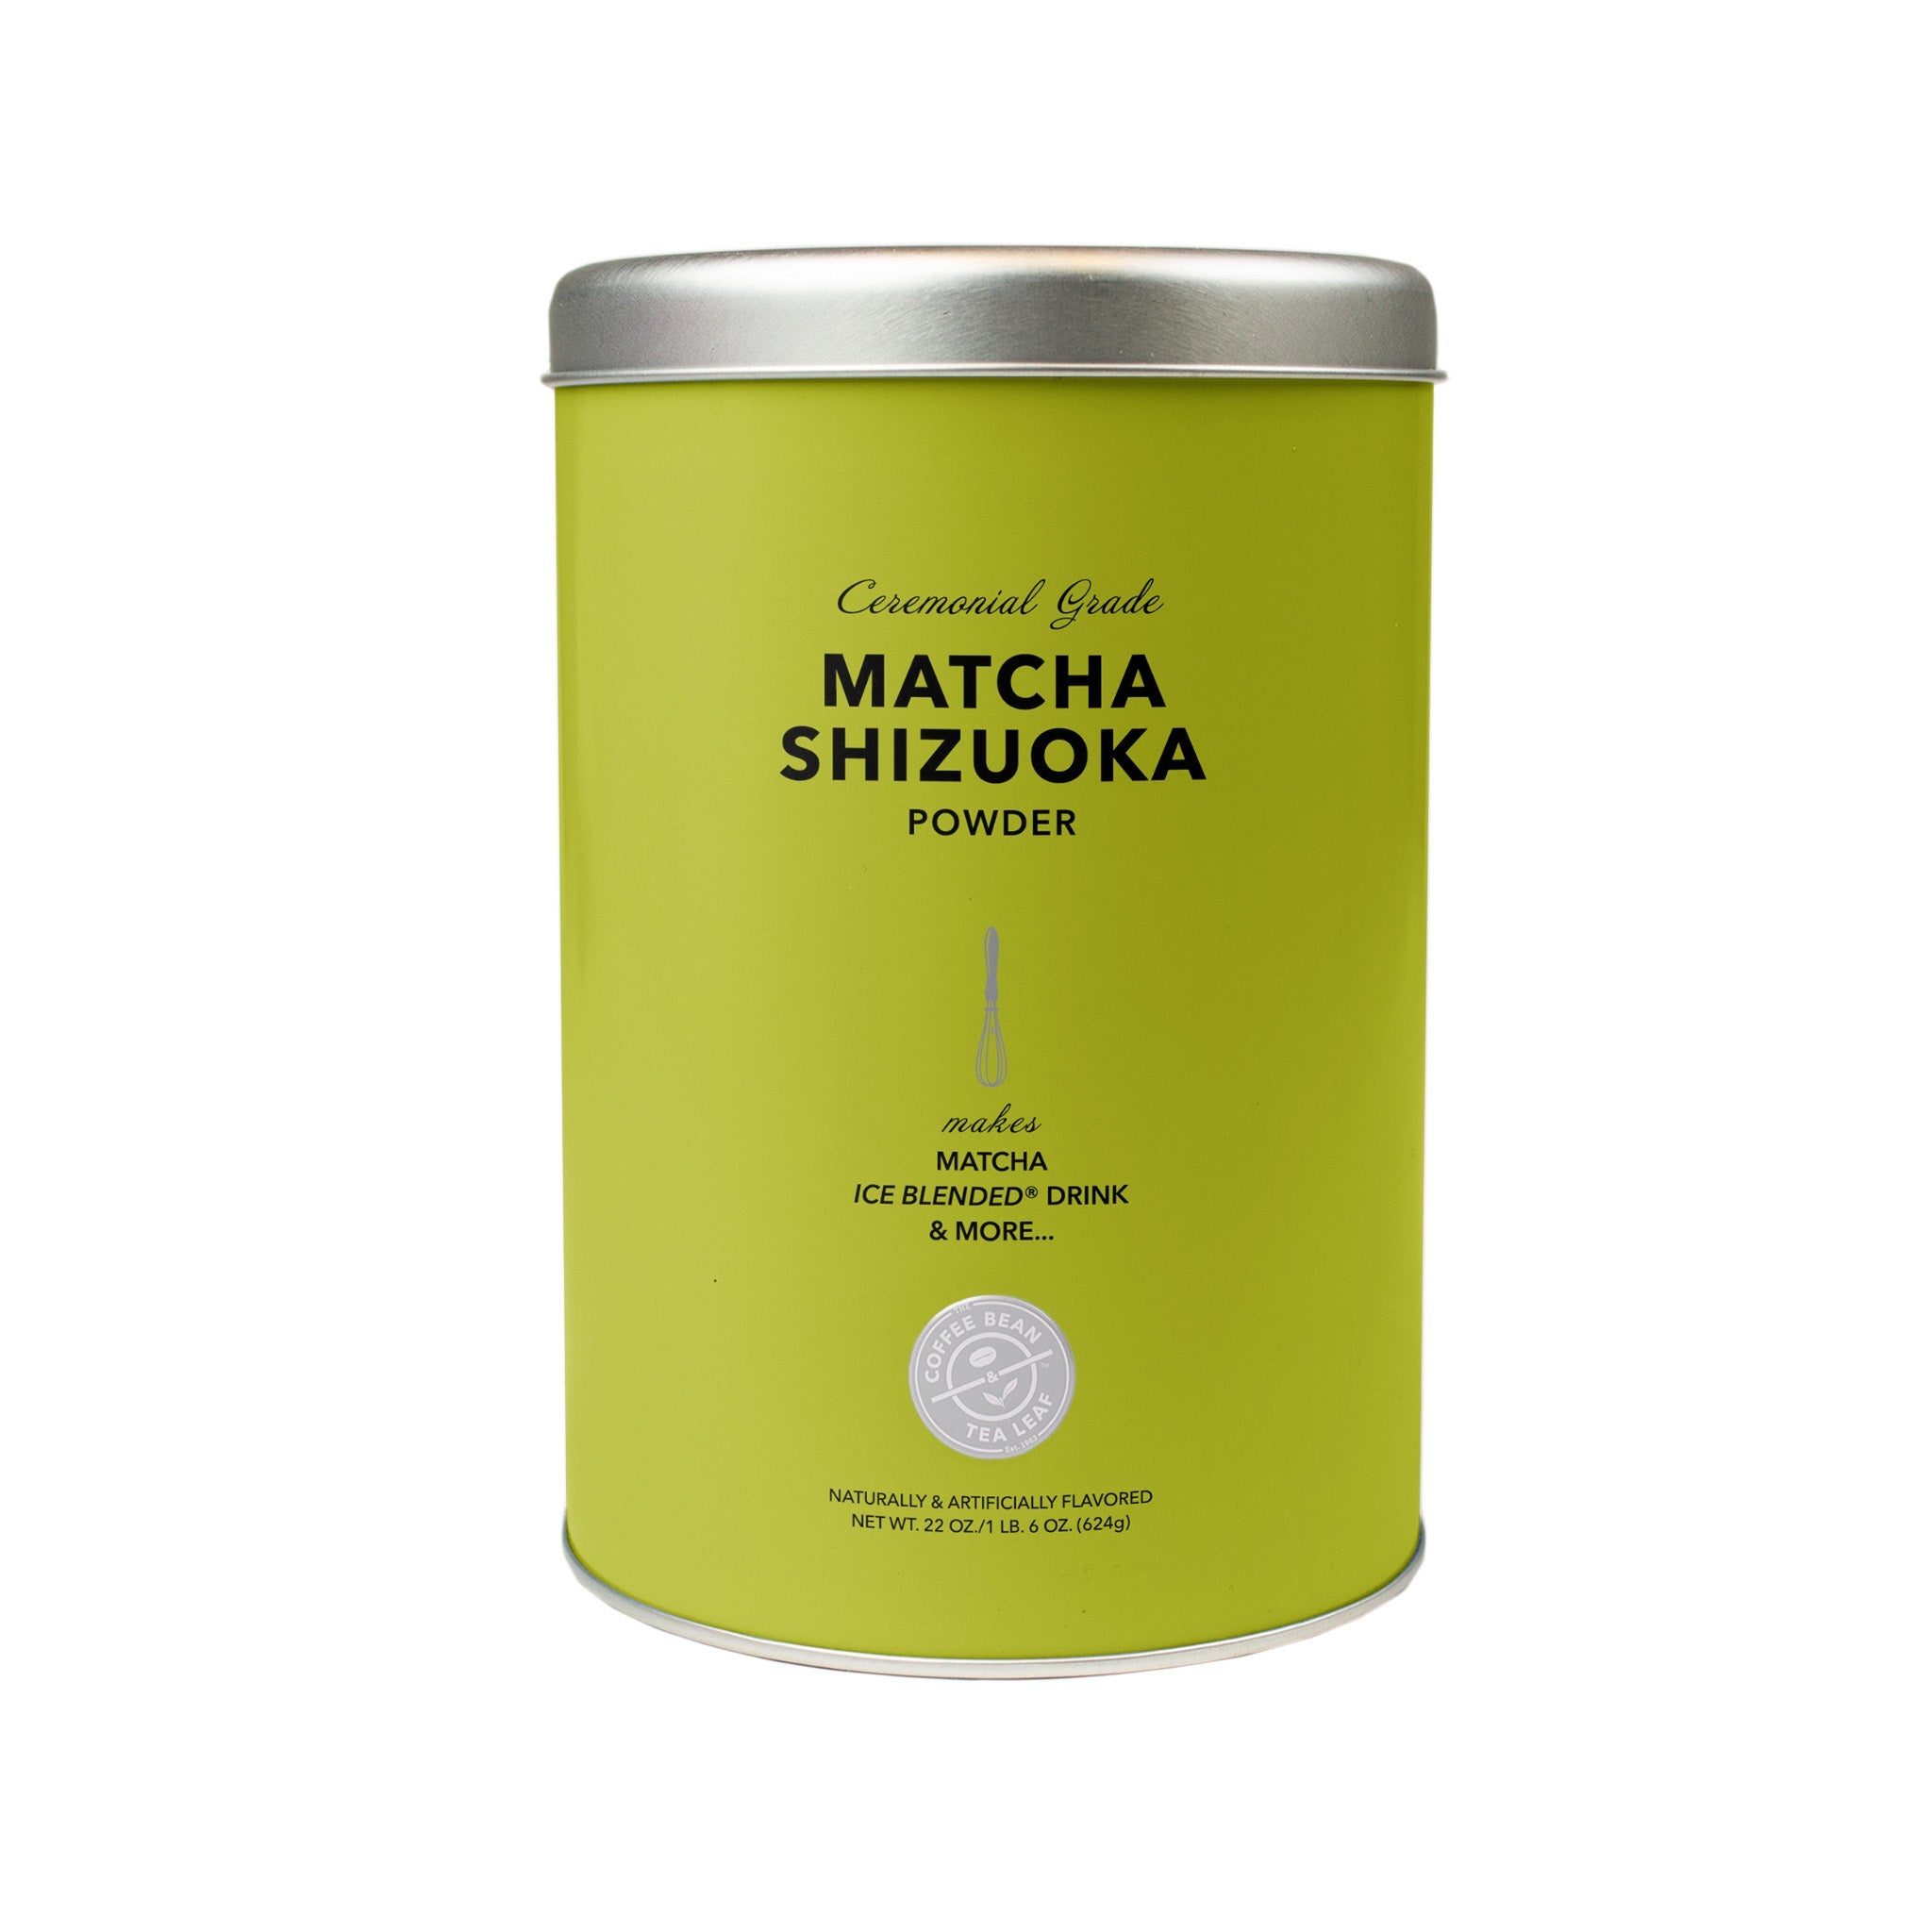 Ceremonial Grade Japanese Matcha Green Tea Powder